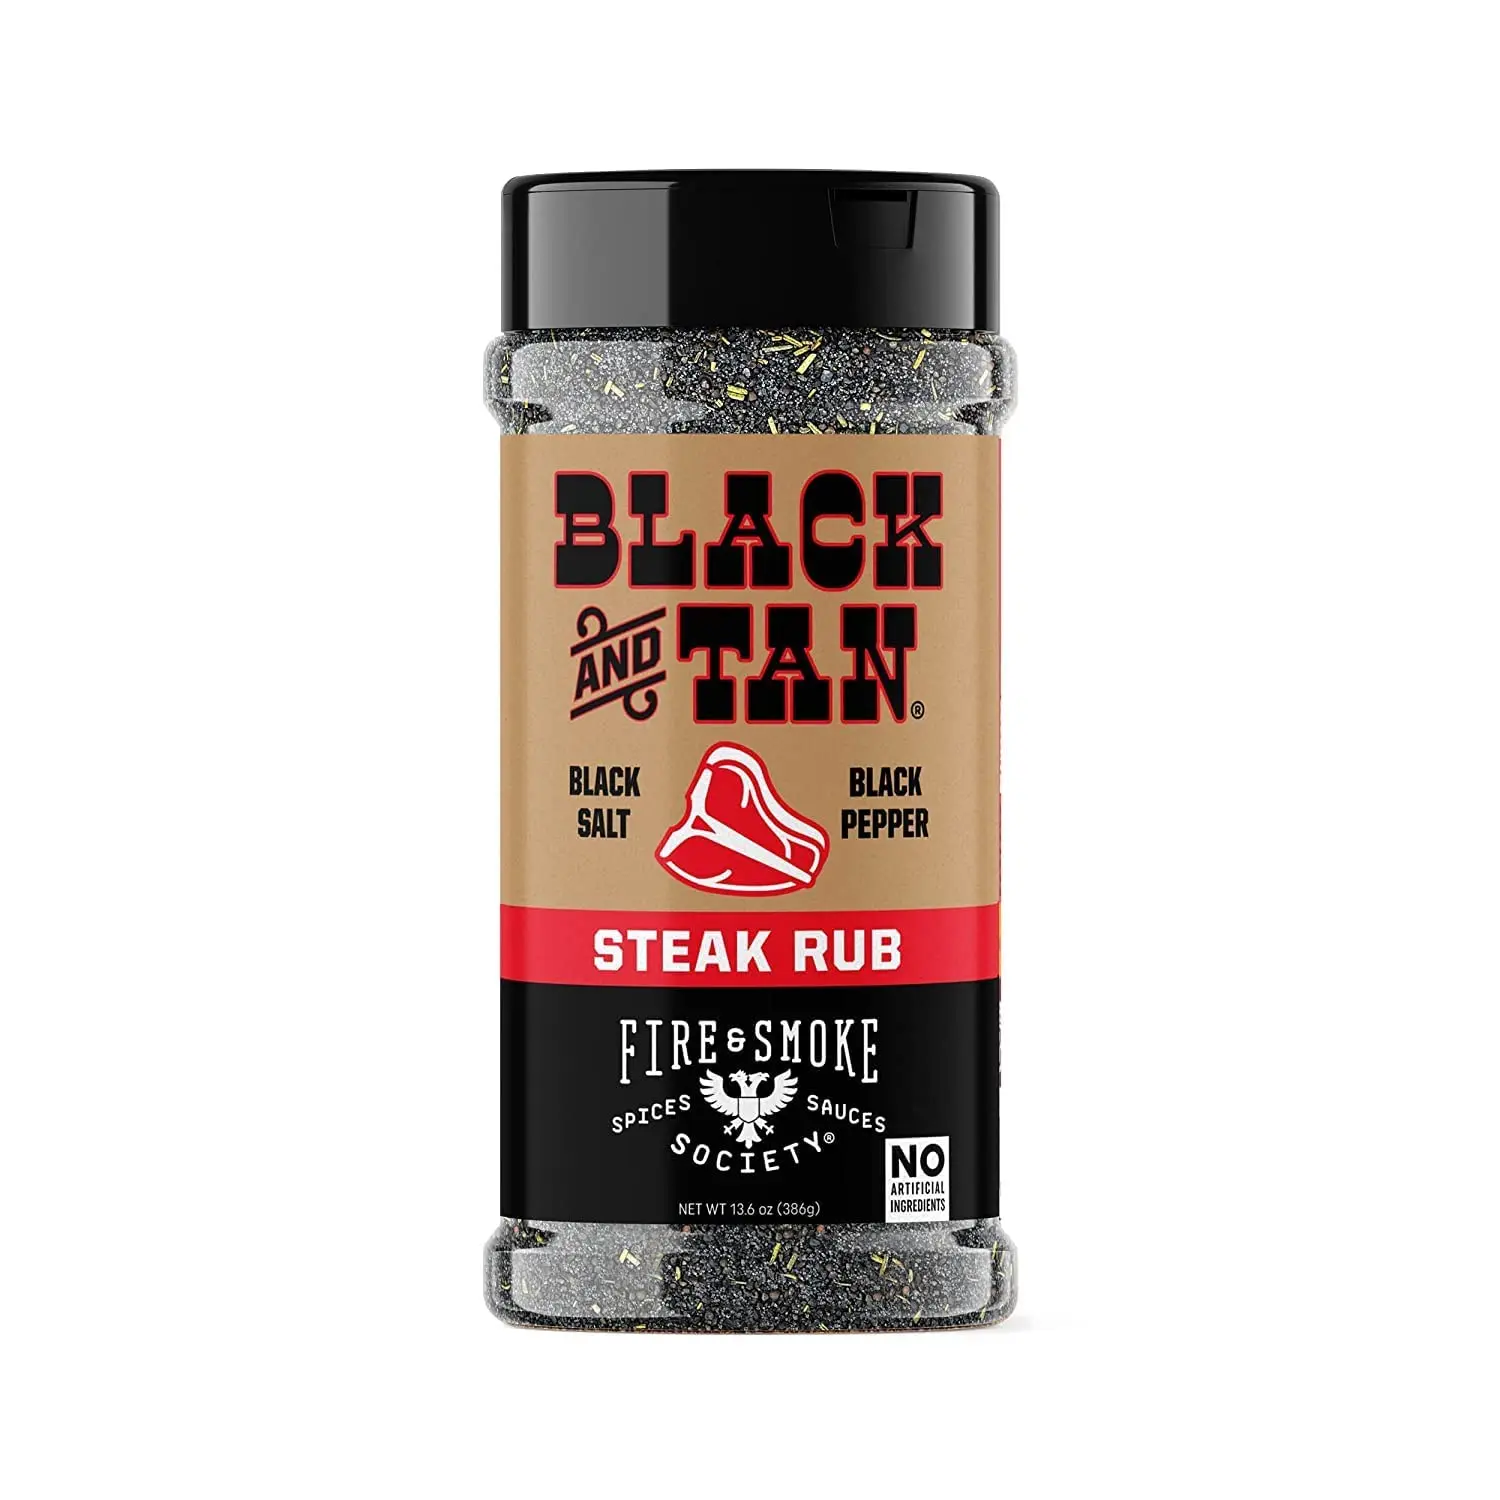 smoked steak rub - What should I season my steak with